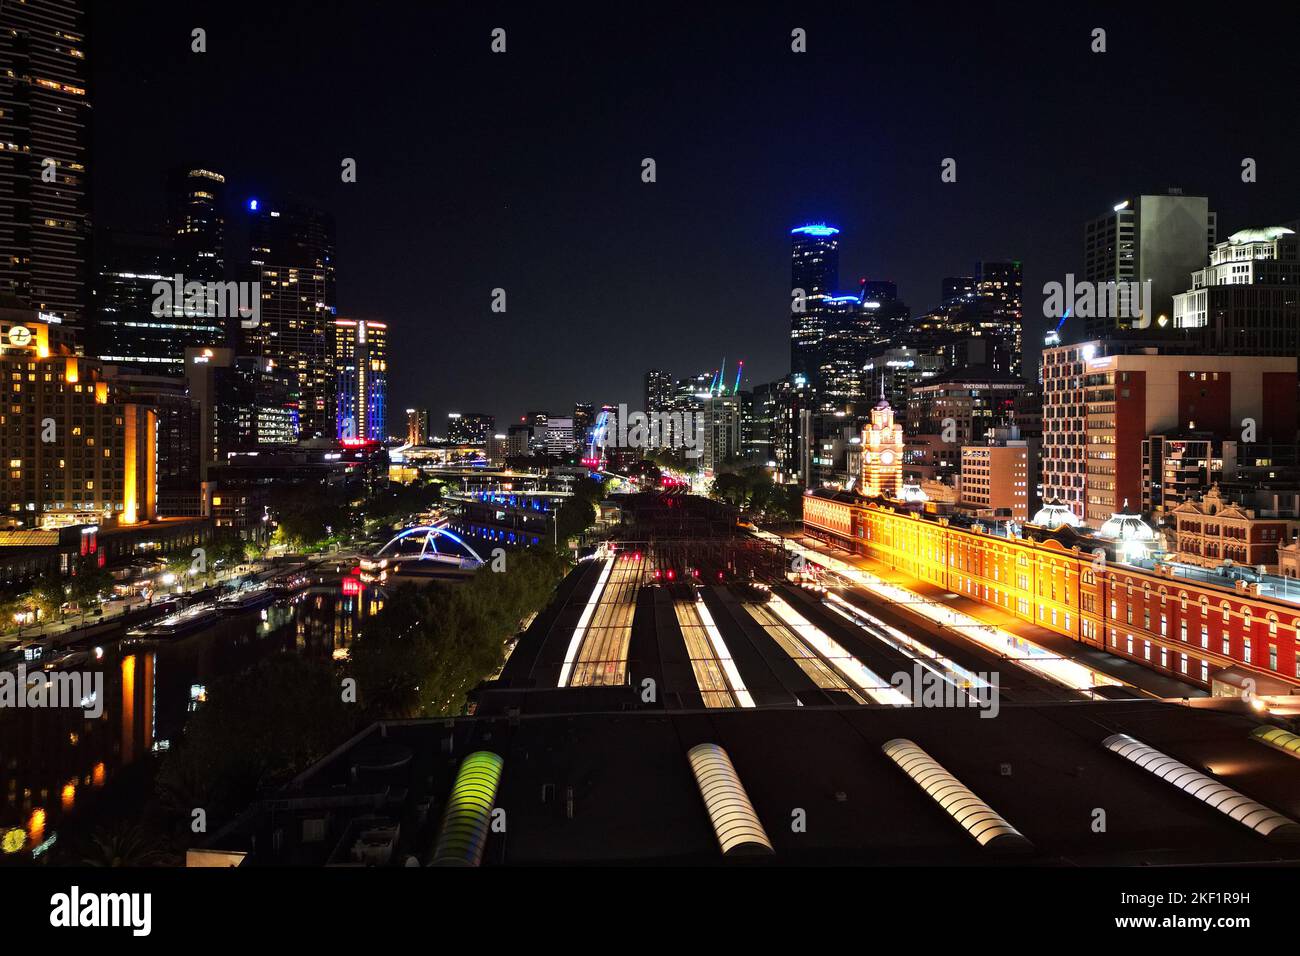 aerial view of Flinders street railway station at night, Melbourne, Australia Stock Photo